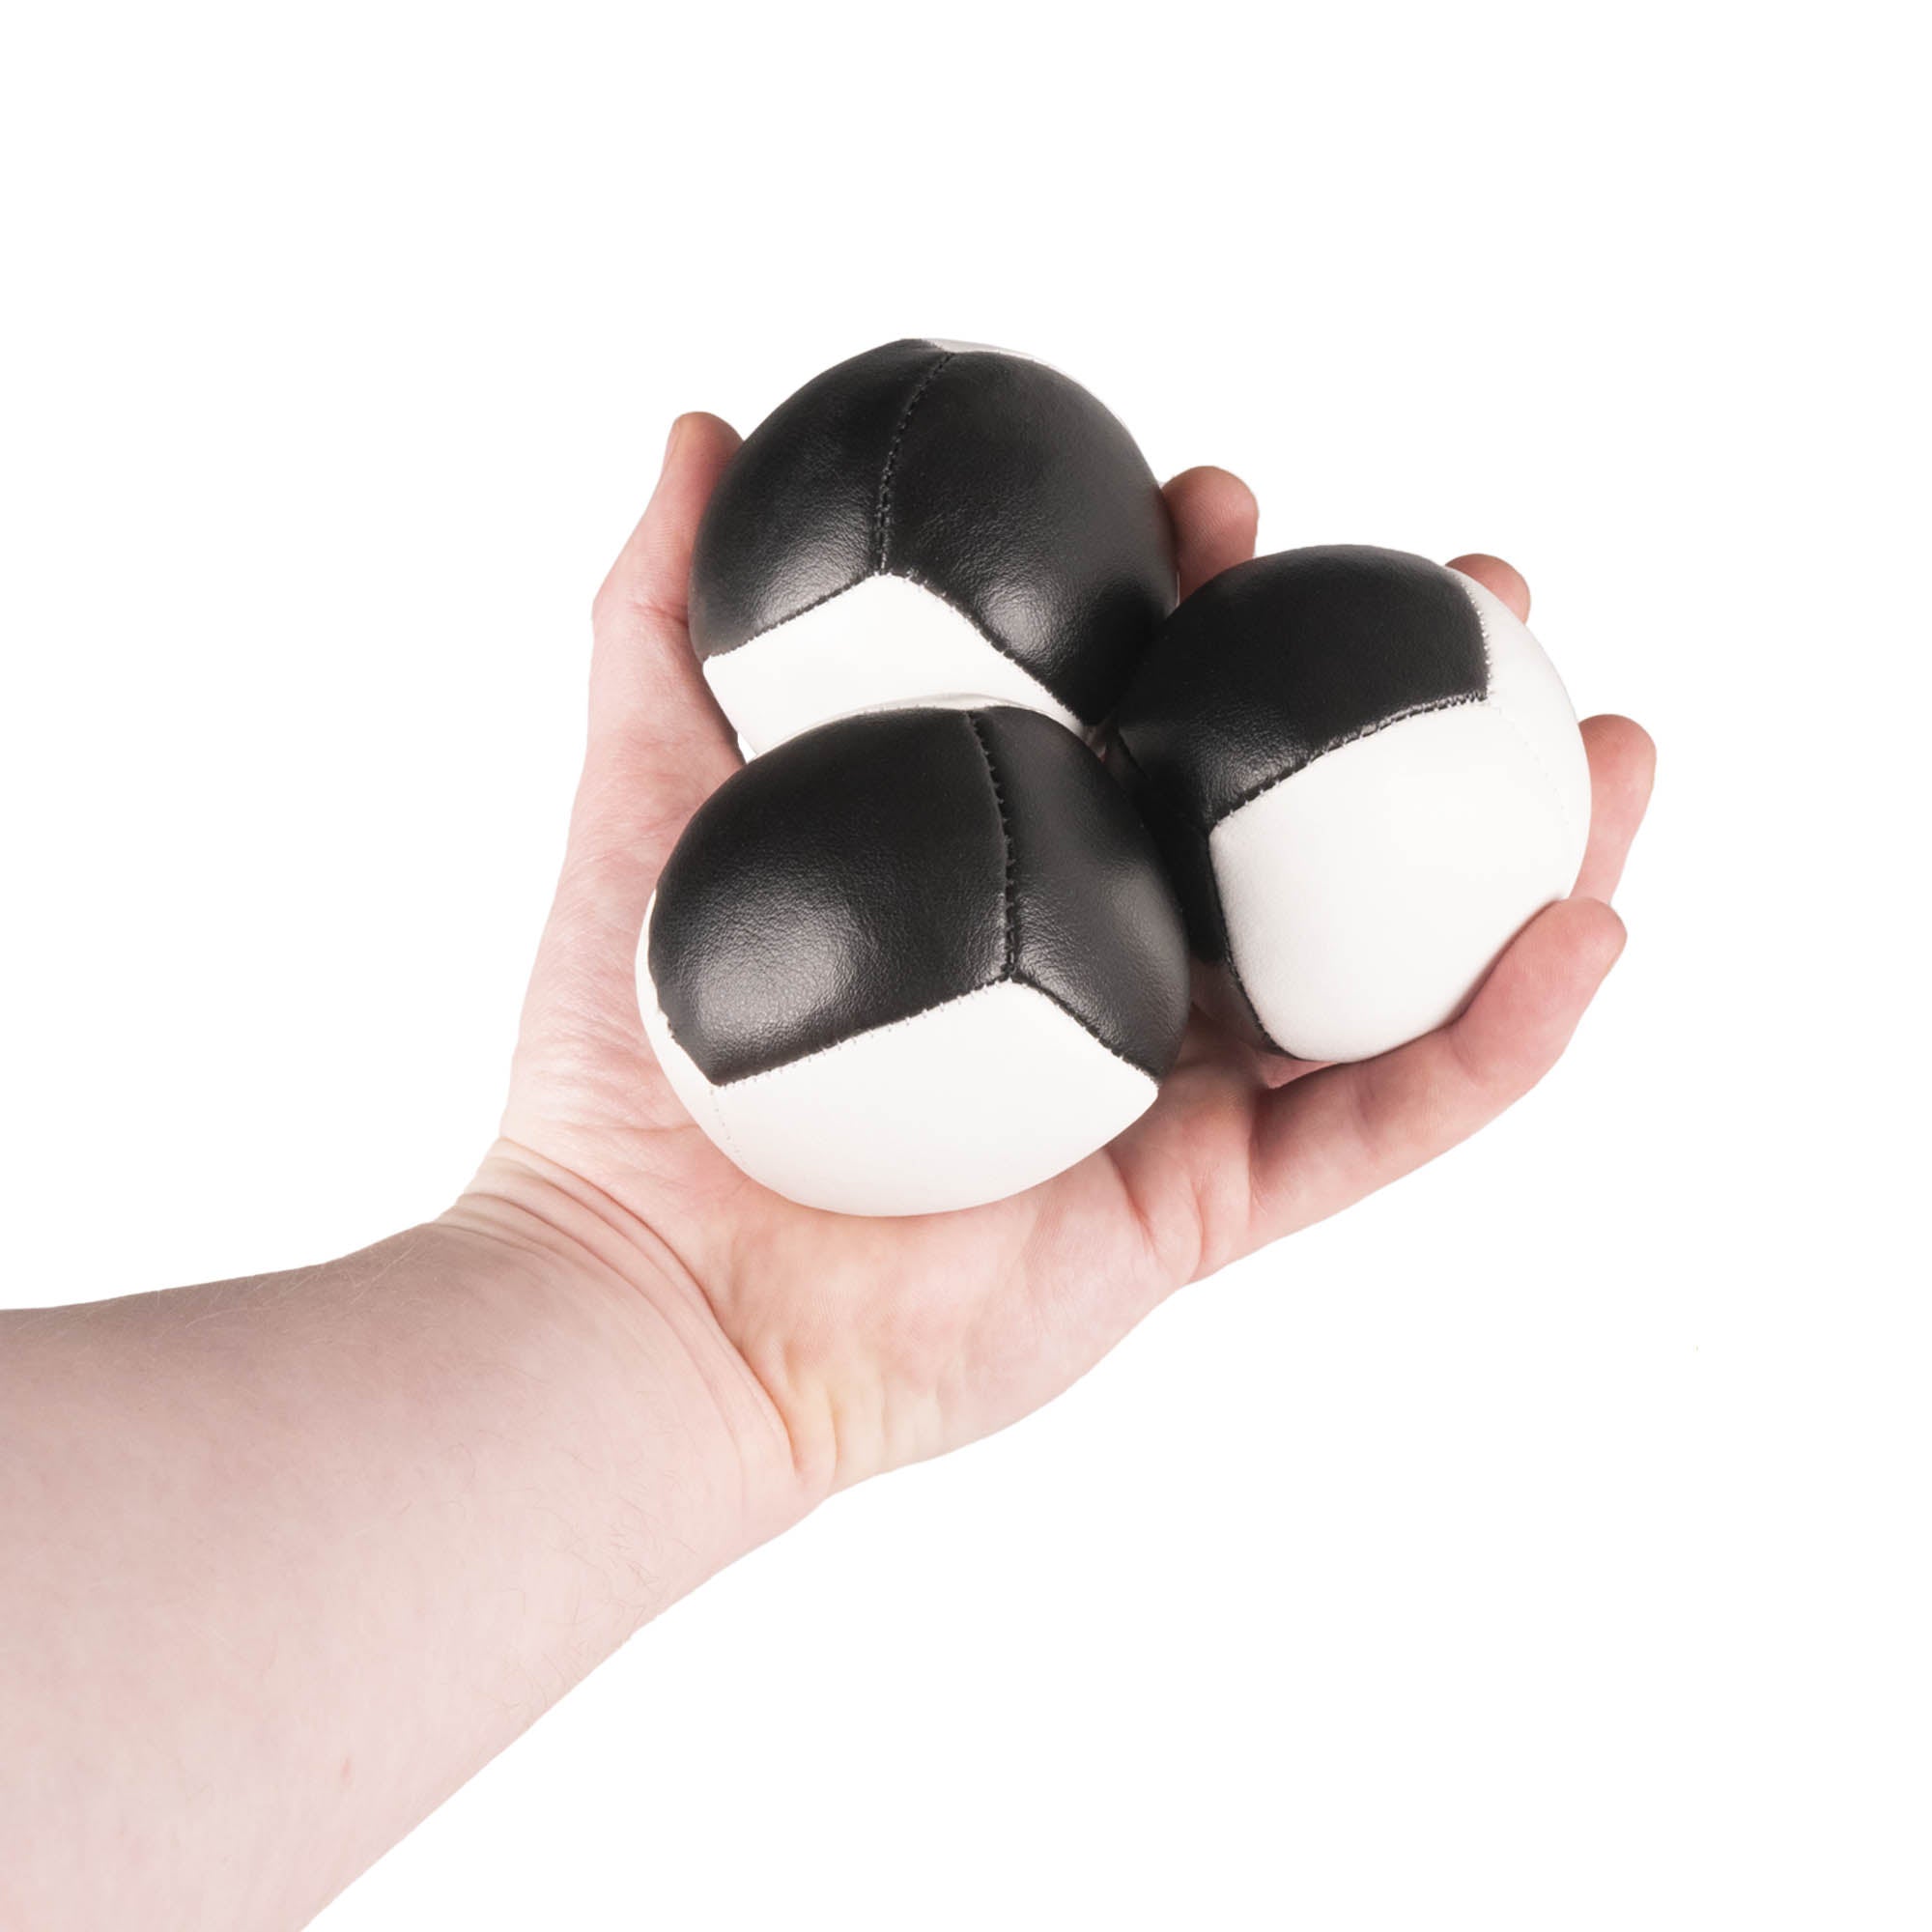 Firetoys three black/white 110g thud juggling balls in hand